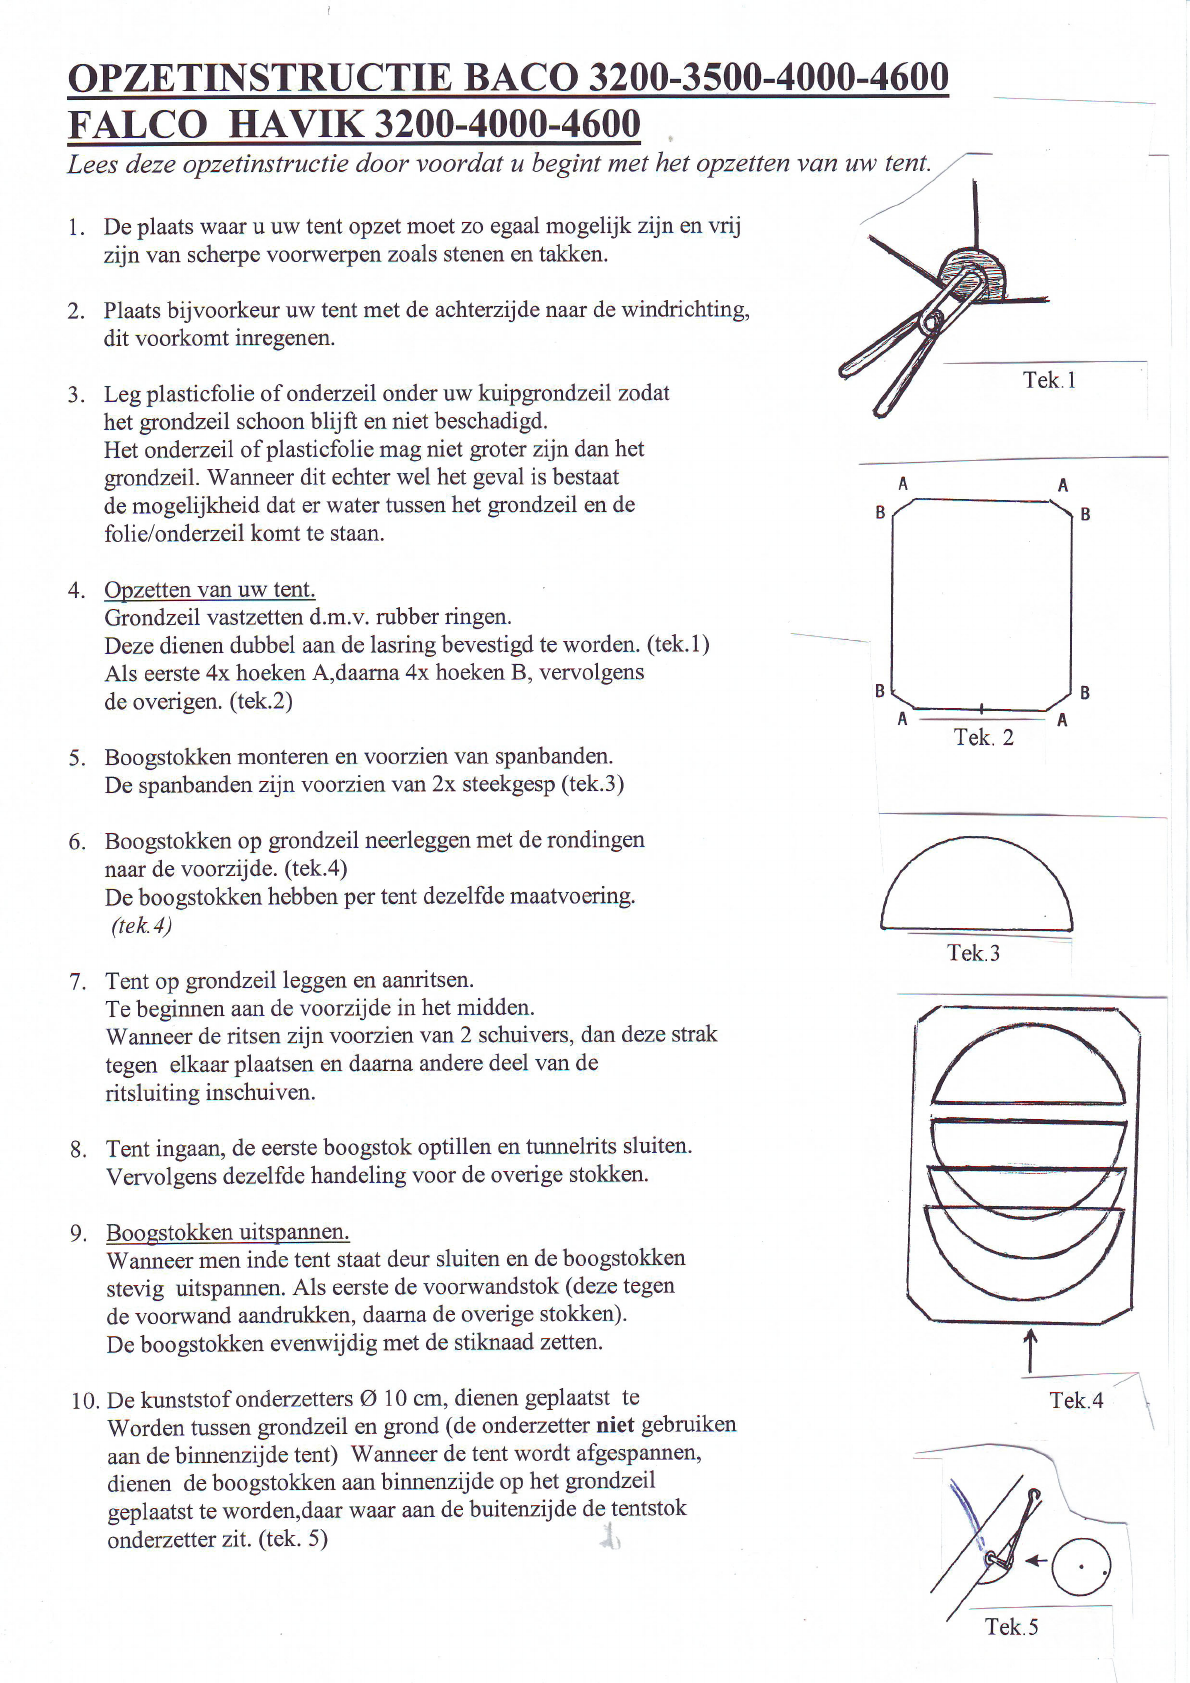 kleermaker kaping doolhof Handleiding Bax Baco 4600 (pagina 1 van 4) (Nederlands)